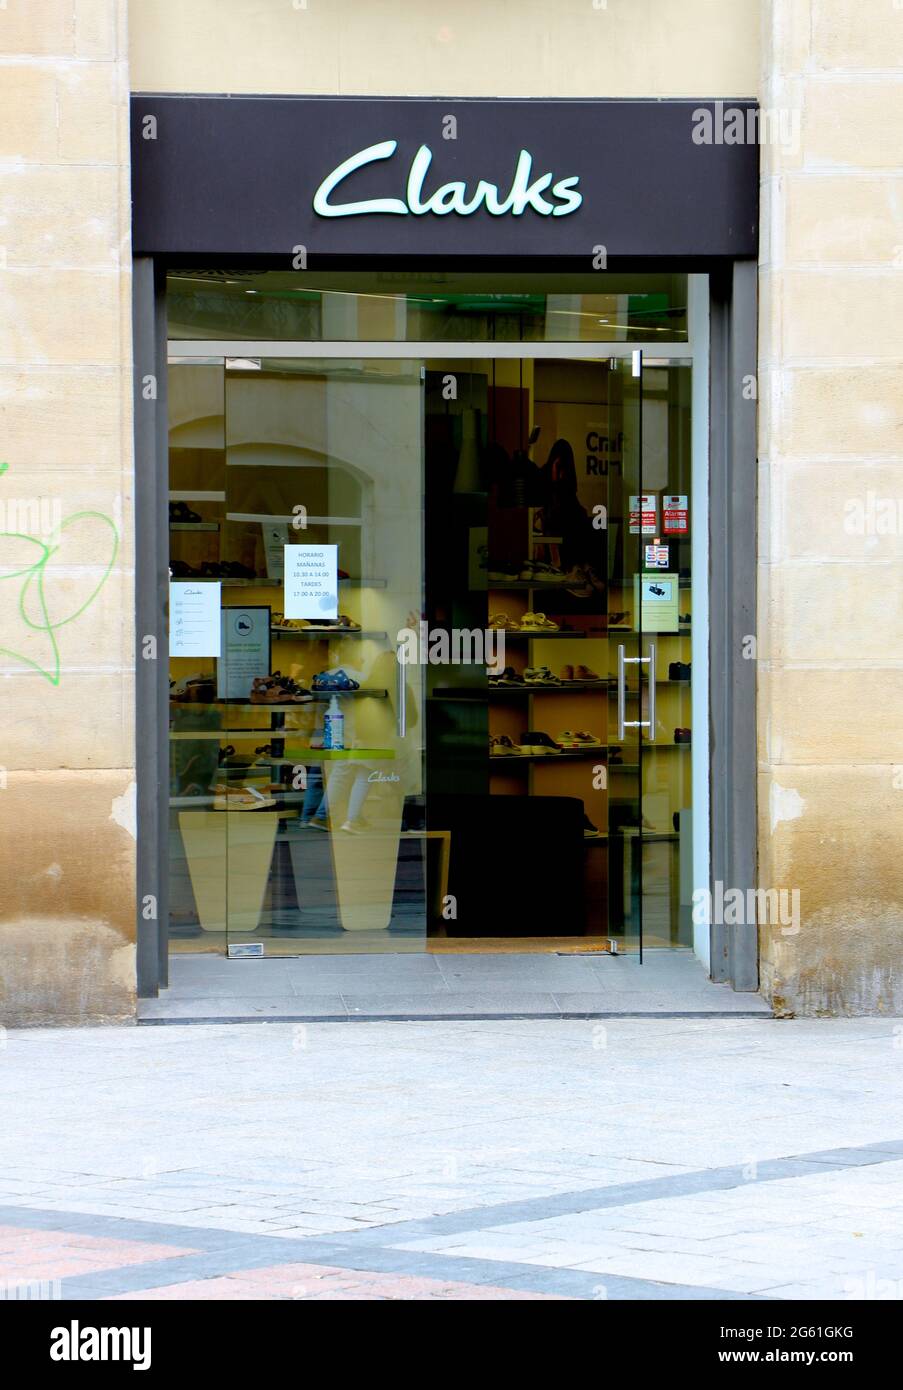 C. & J. Clark International Ltd known as Clarks shop sign shop entrance Zaragoza Aragon Stock Photo - Alamy